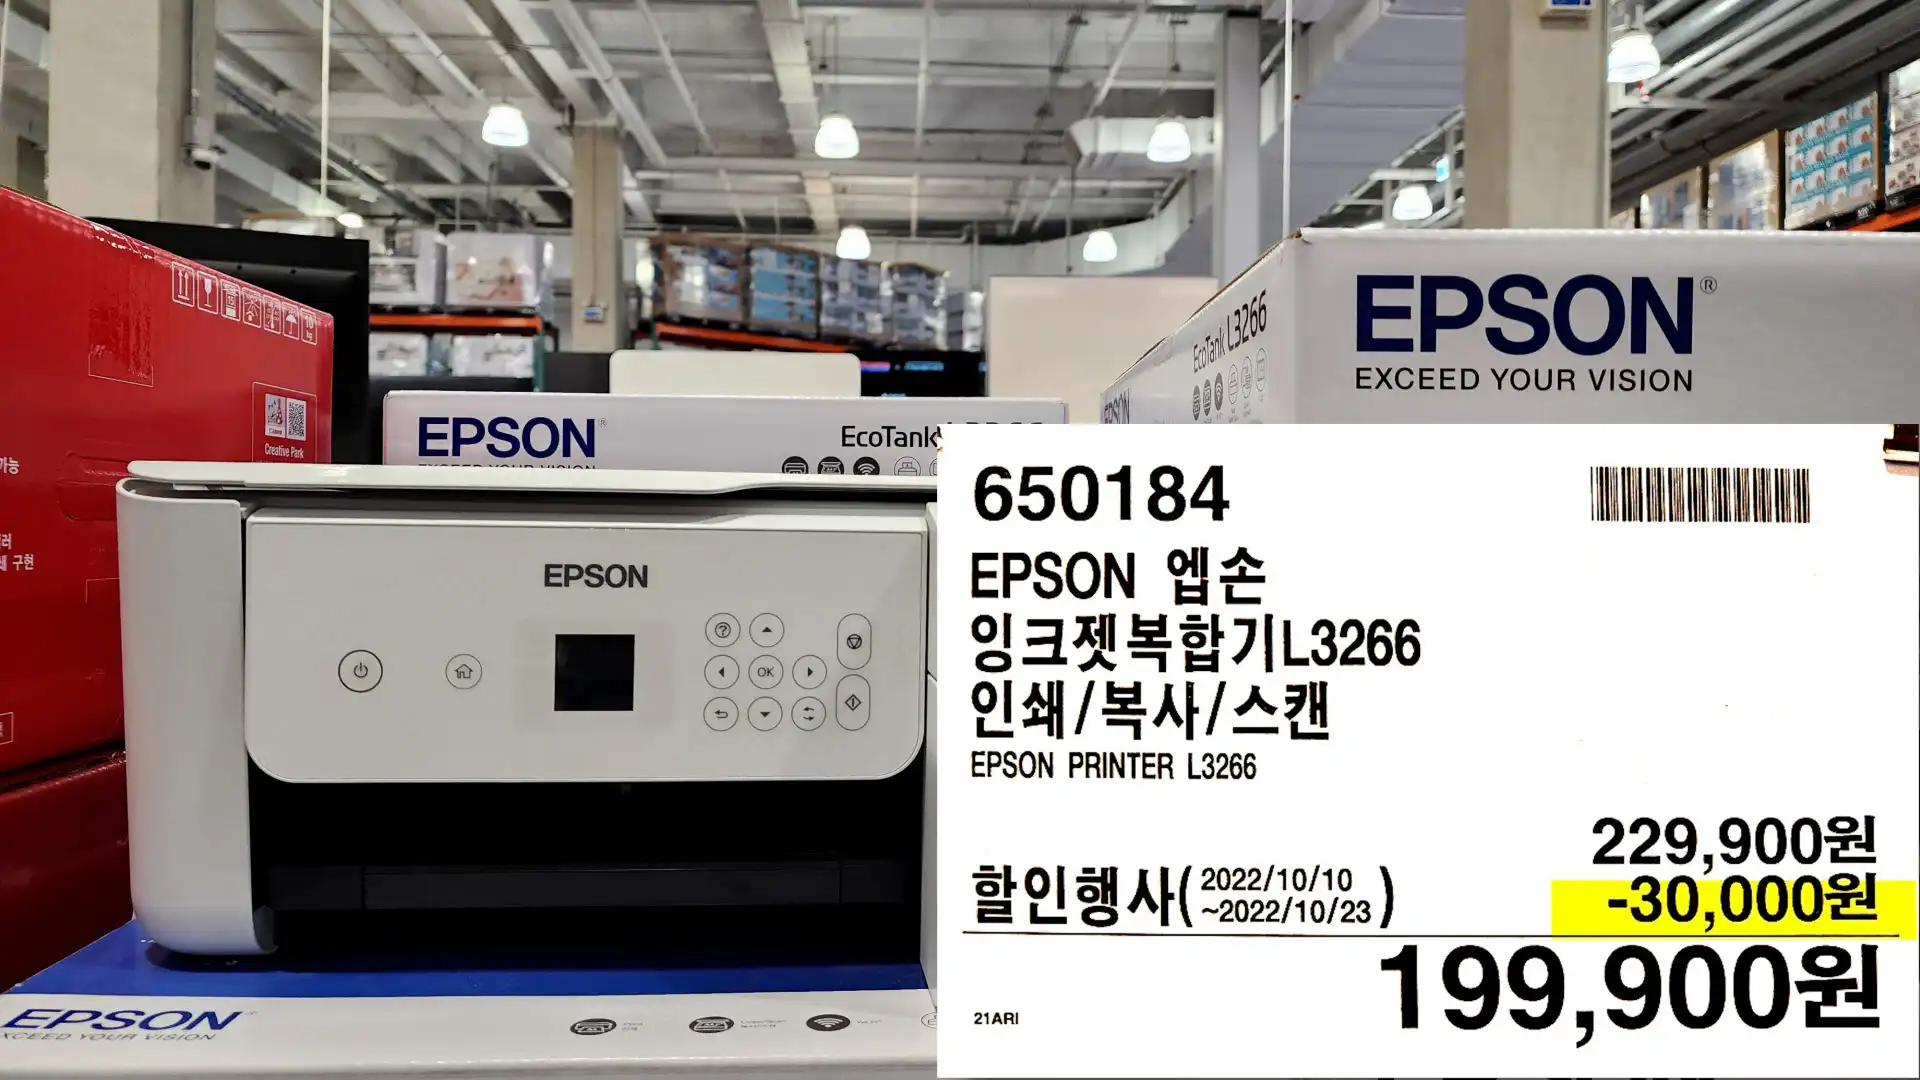 EPSON 엡손
잉크젯복합기L3266
인쇄/복사/스캔
EPSON PRINTER L3266
199,900원